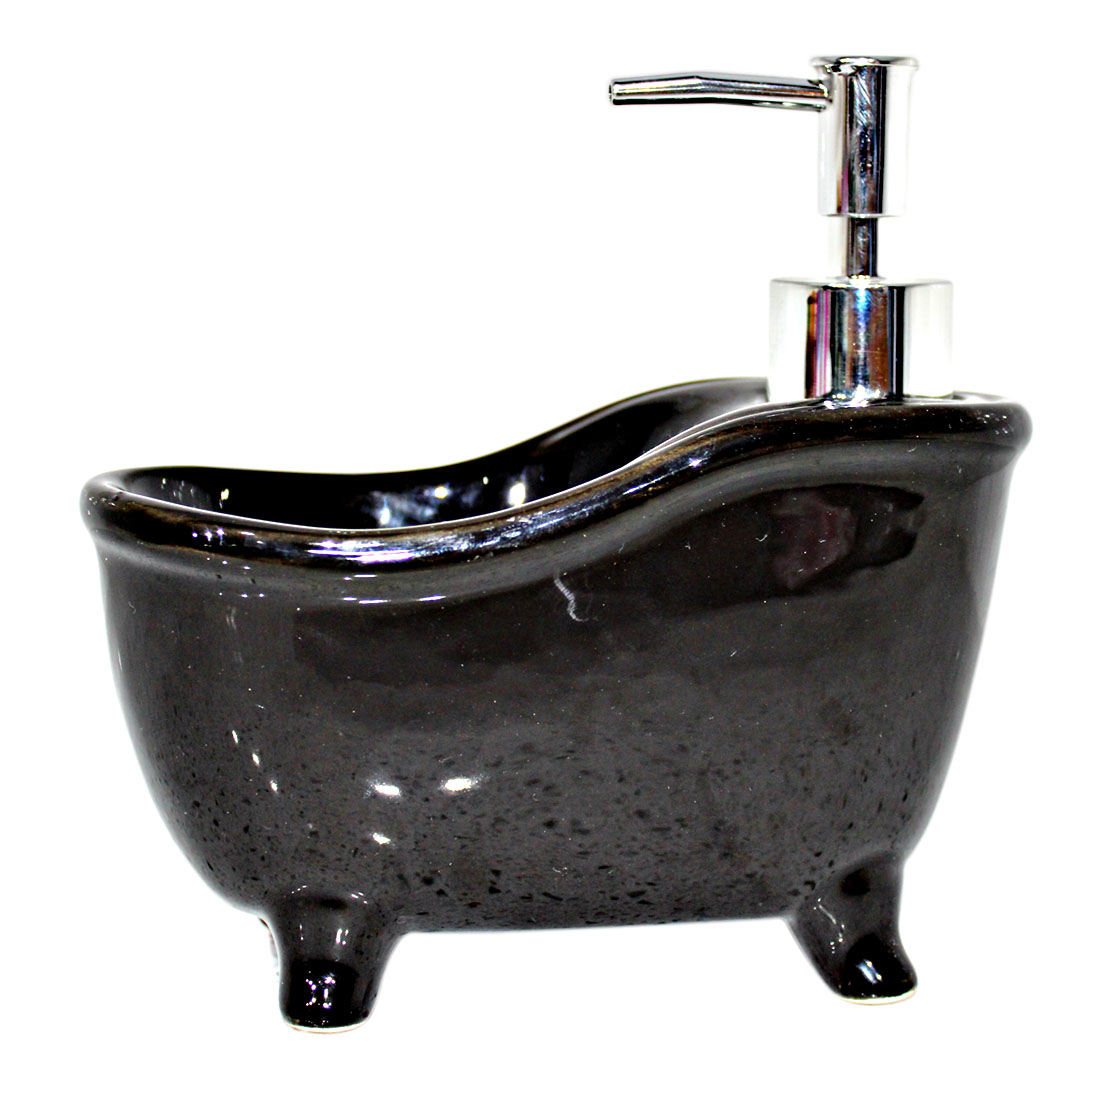 ORKA Ceramic Liquid Soap Dispenser For Bathroom/Kitchen Use Big Size (Black)  